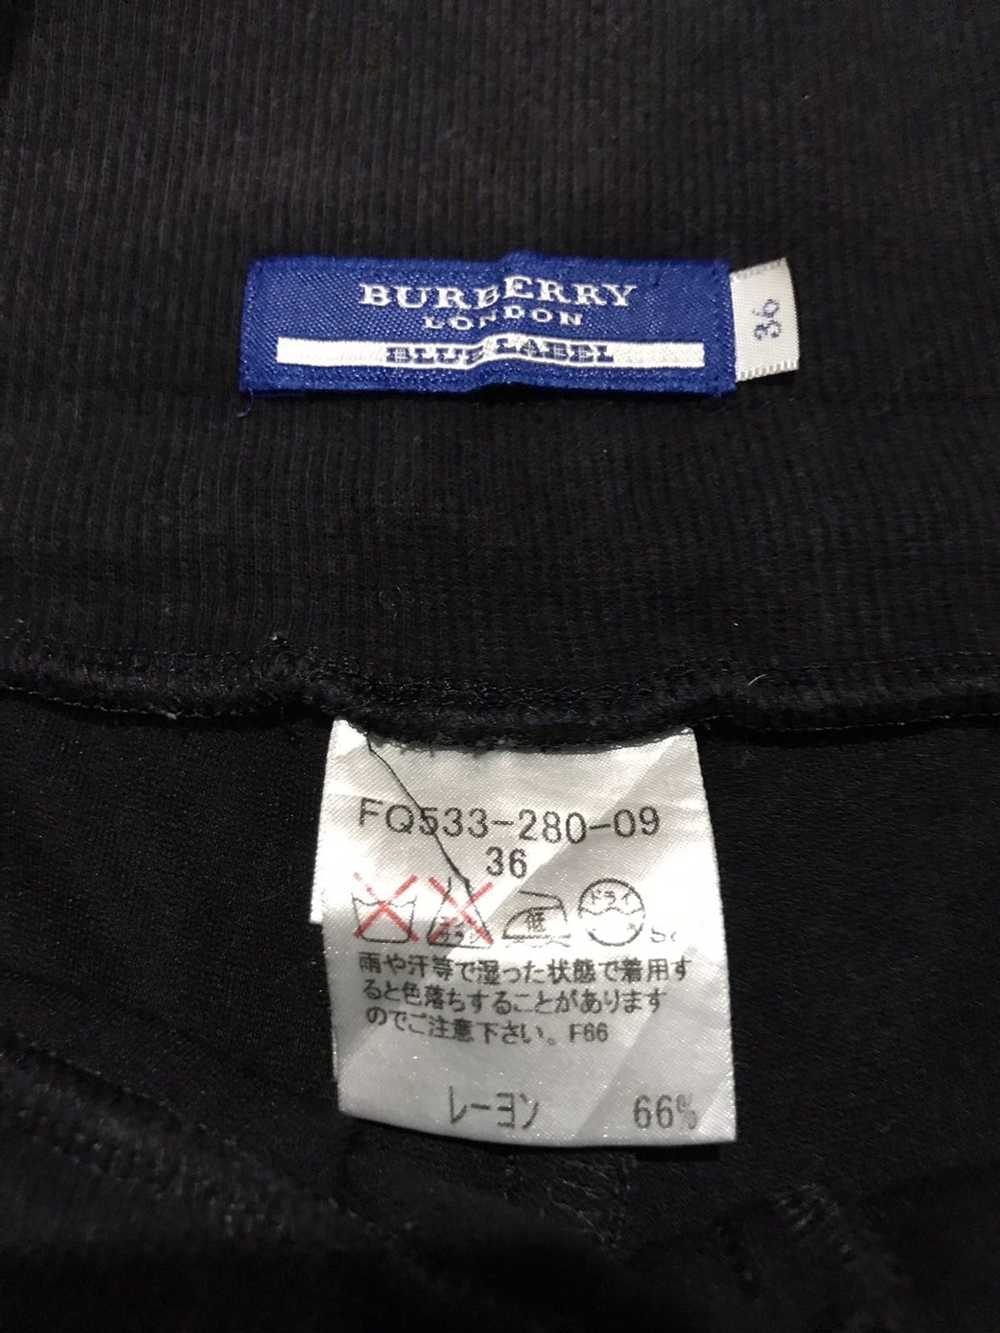 Burberry Burberry Blue Label Short Pant - image 3